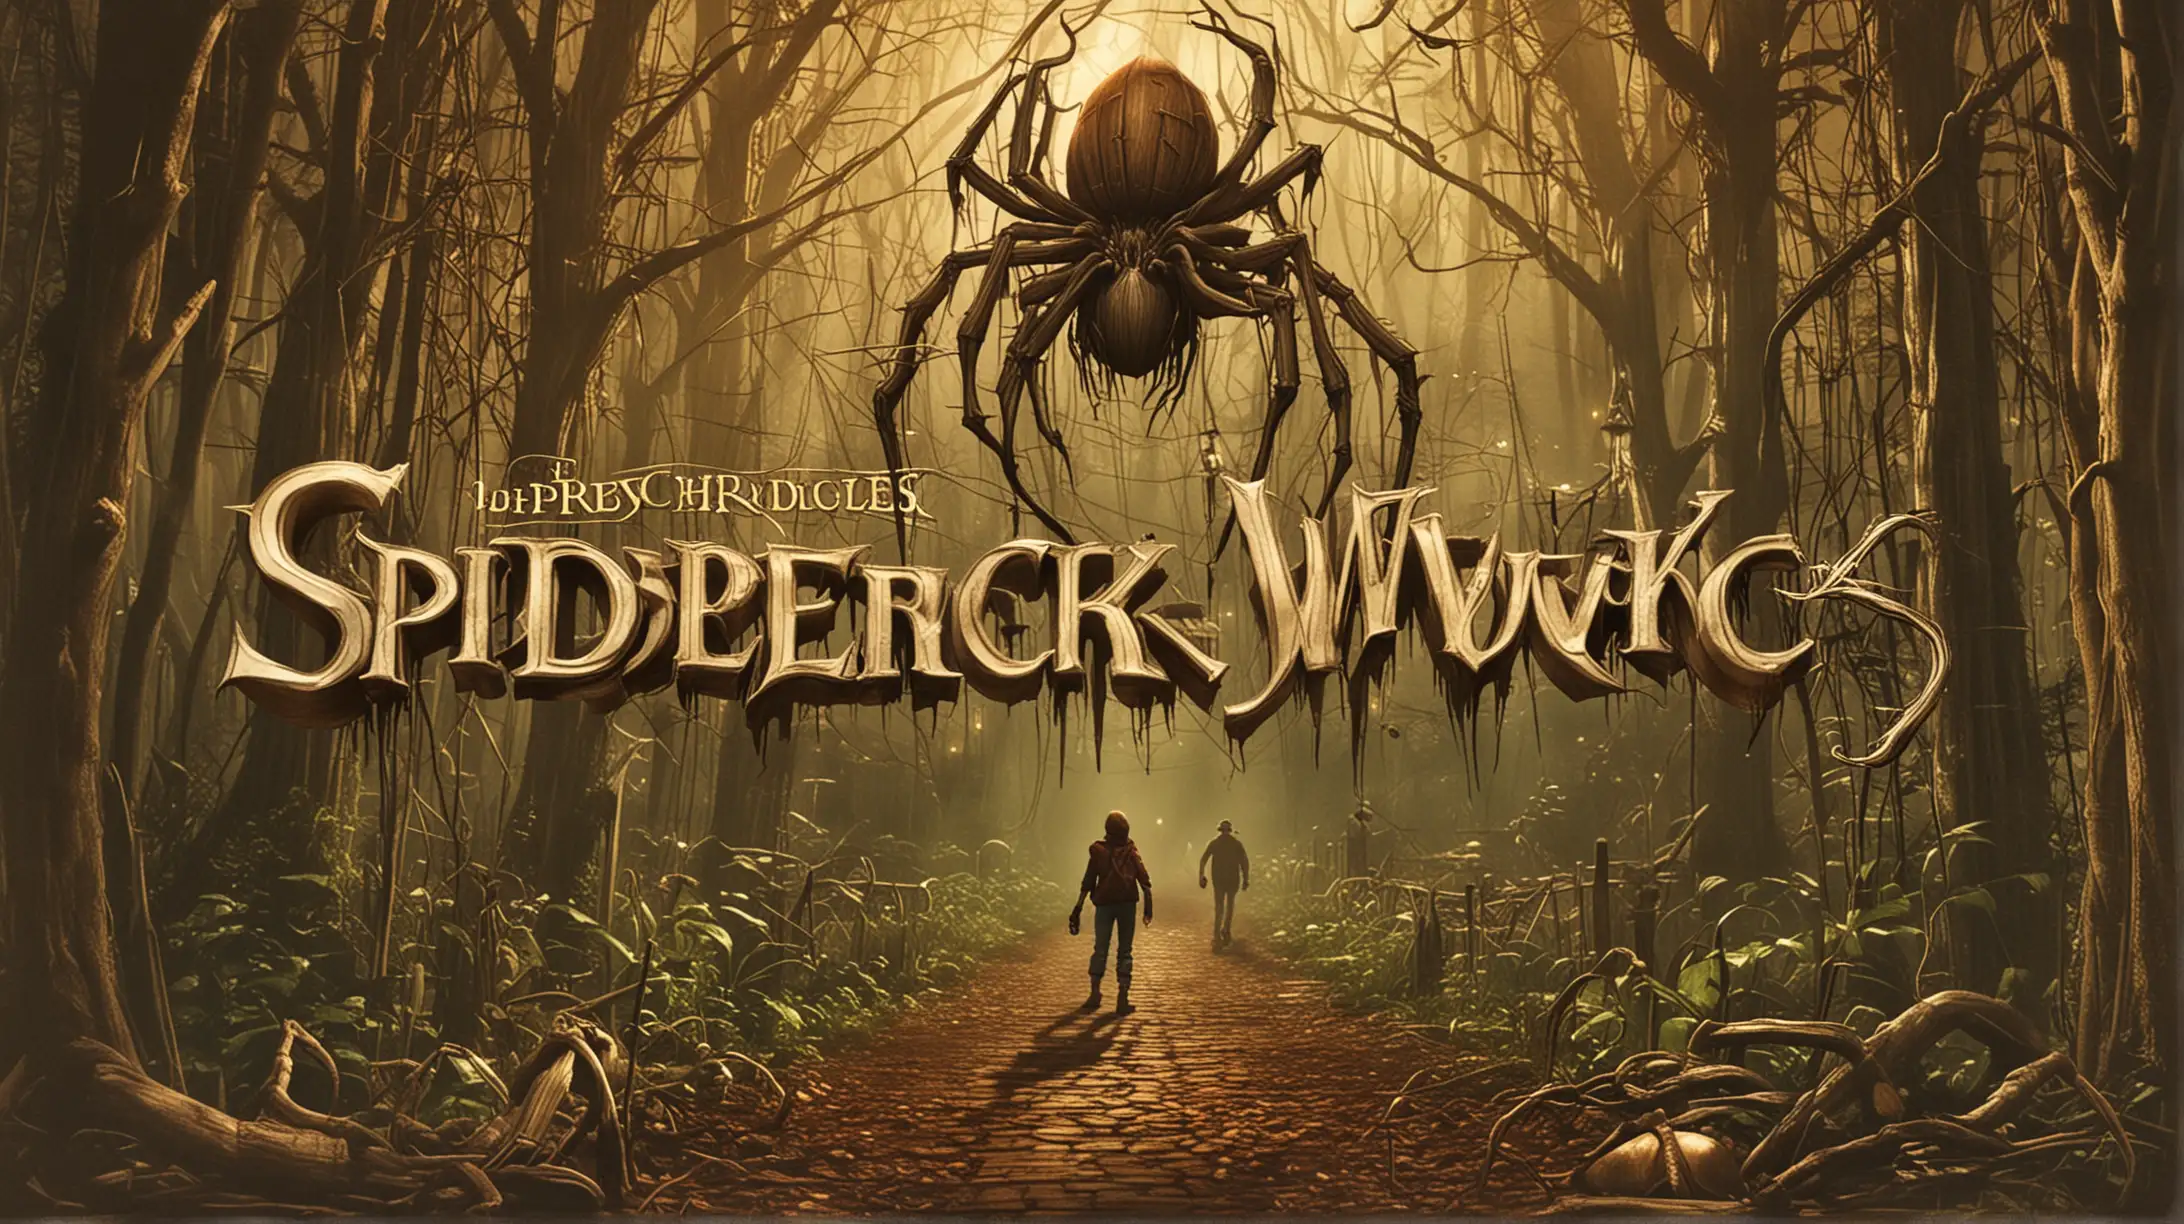 Fantasy Adventure in the Spiderwick Chronicles